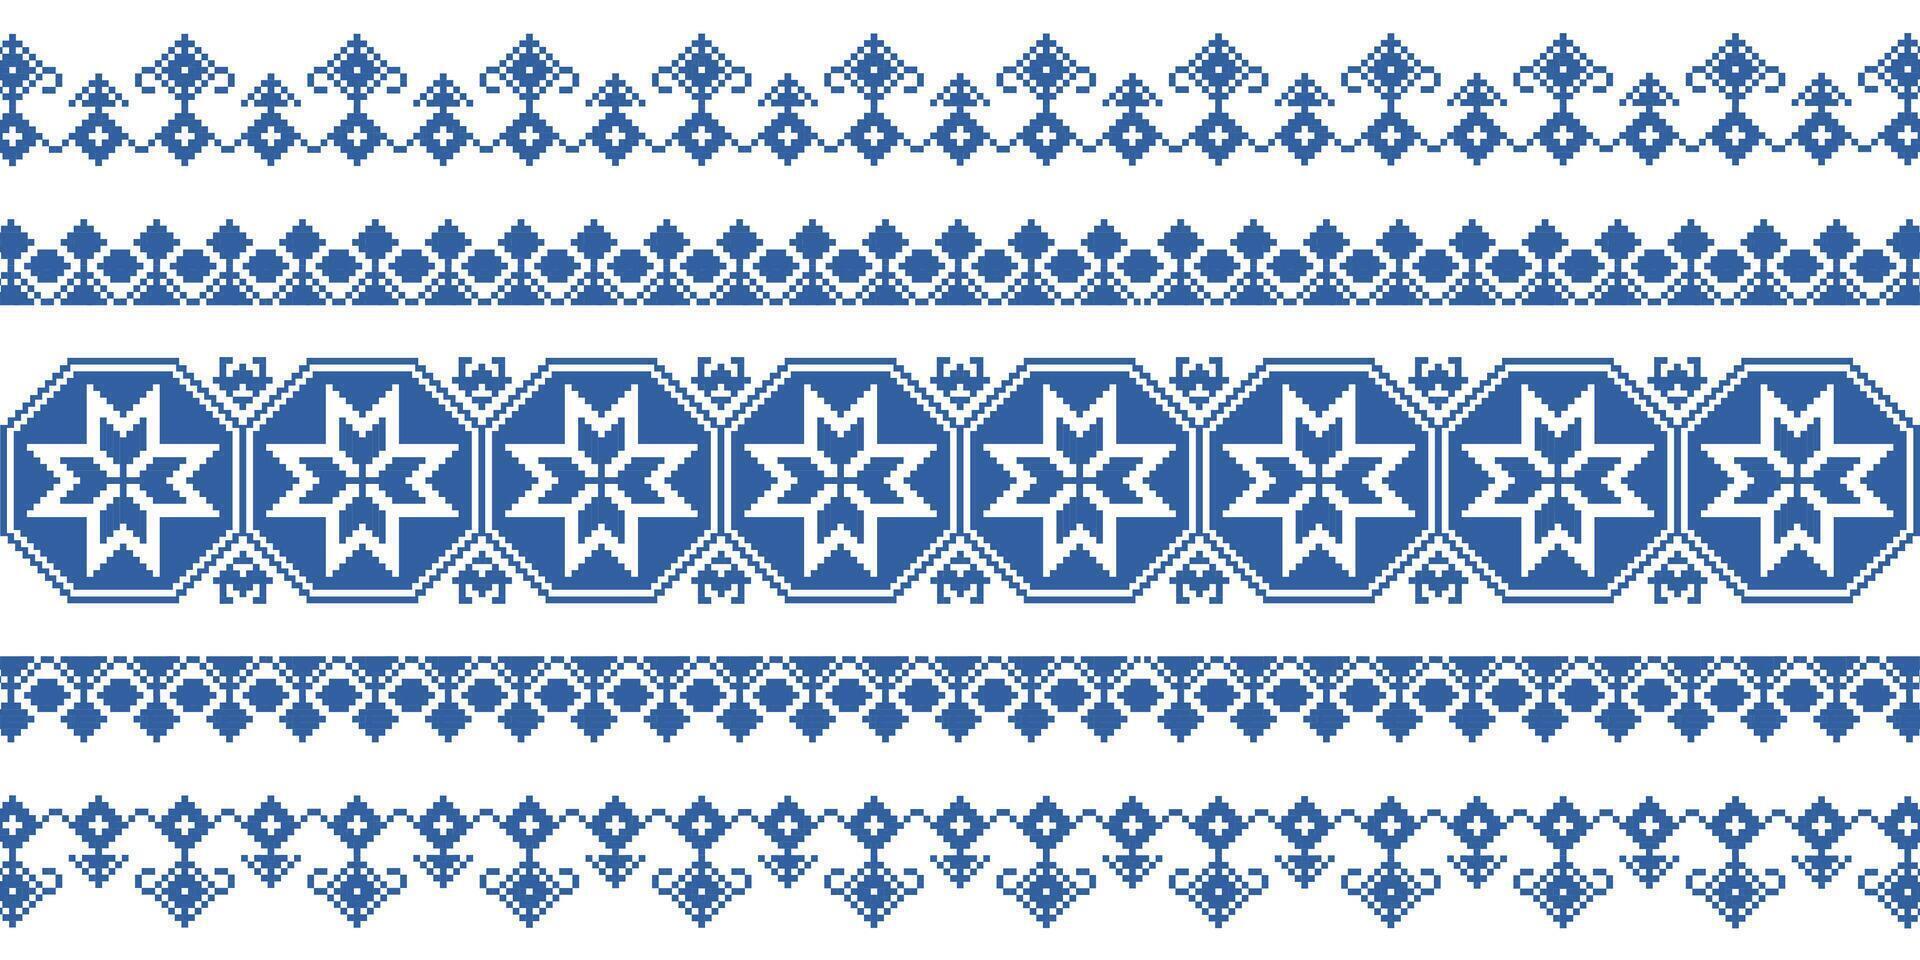 Ukrainian ornament in blue color,seamless border, pixel art vector